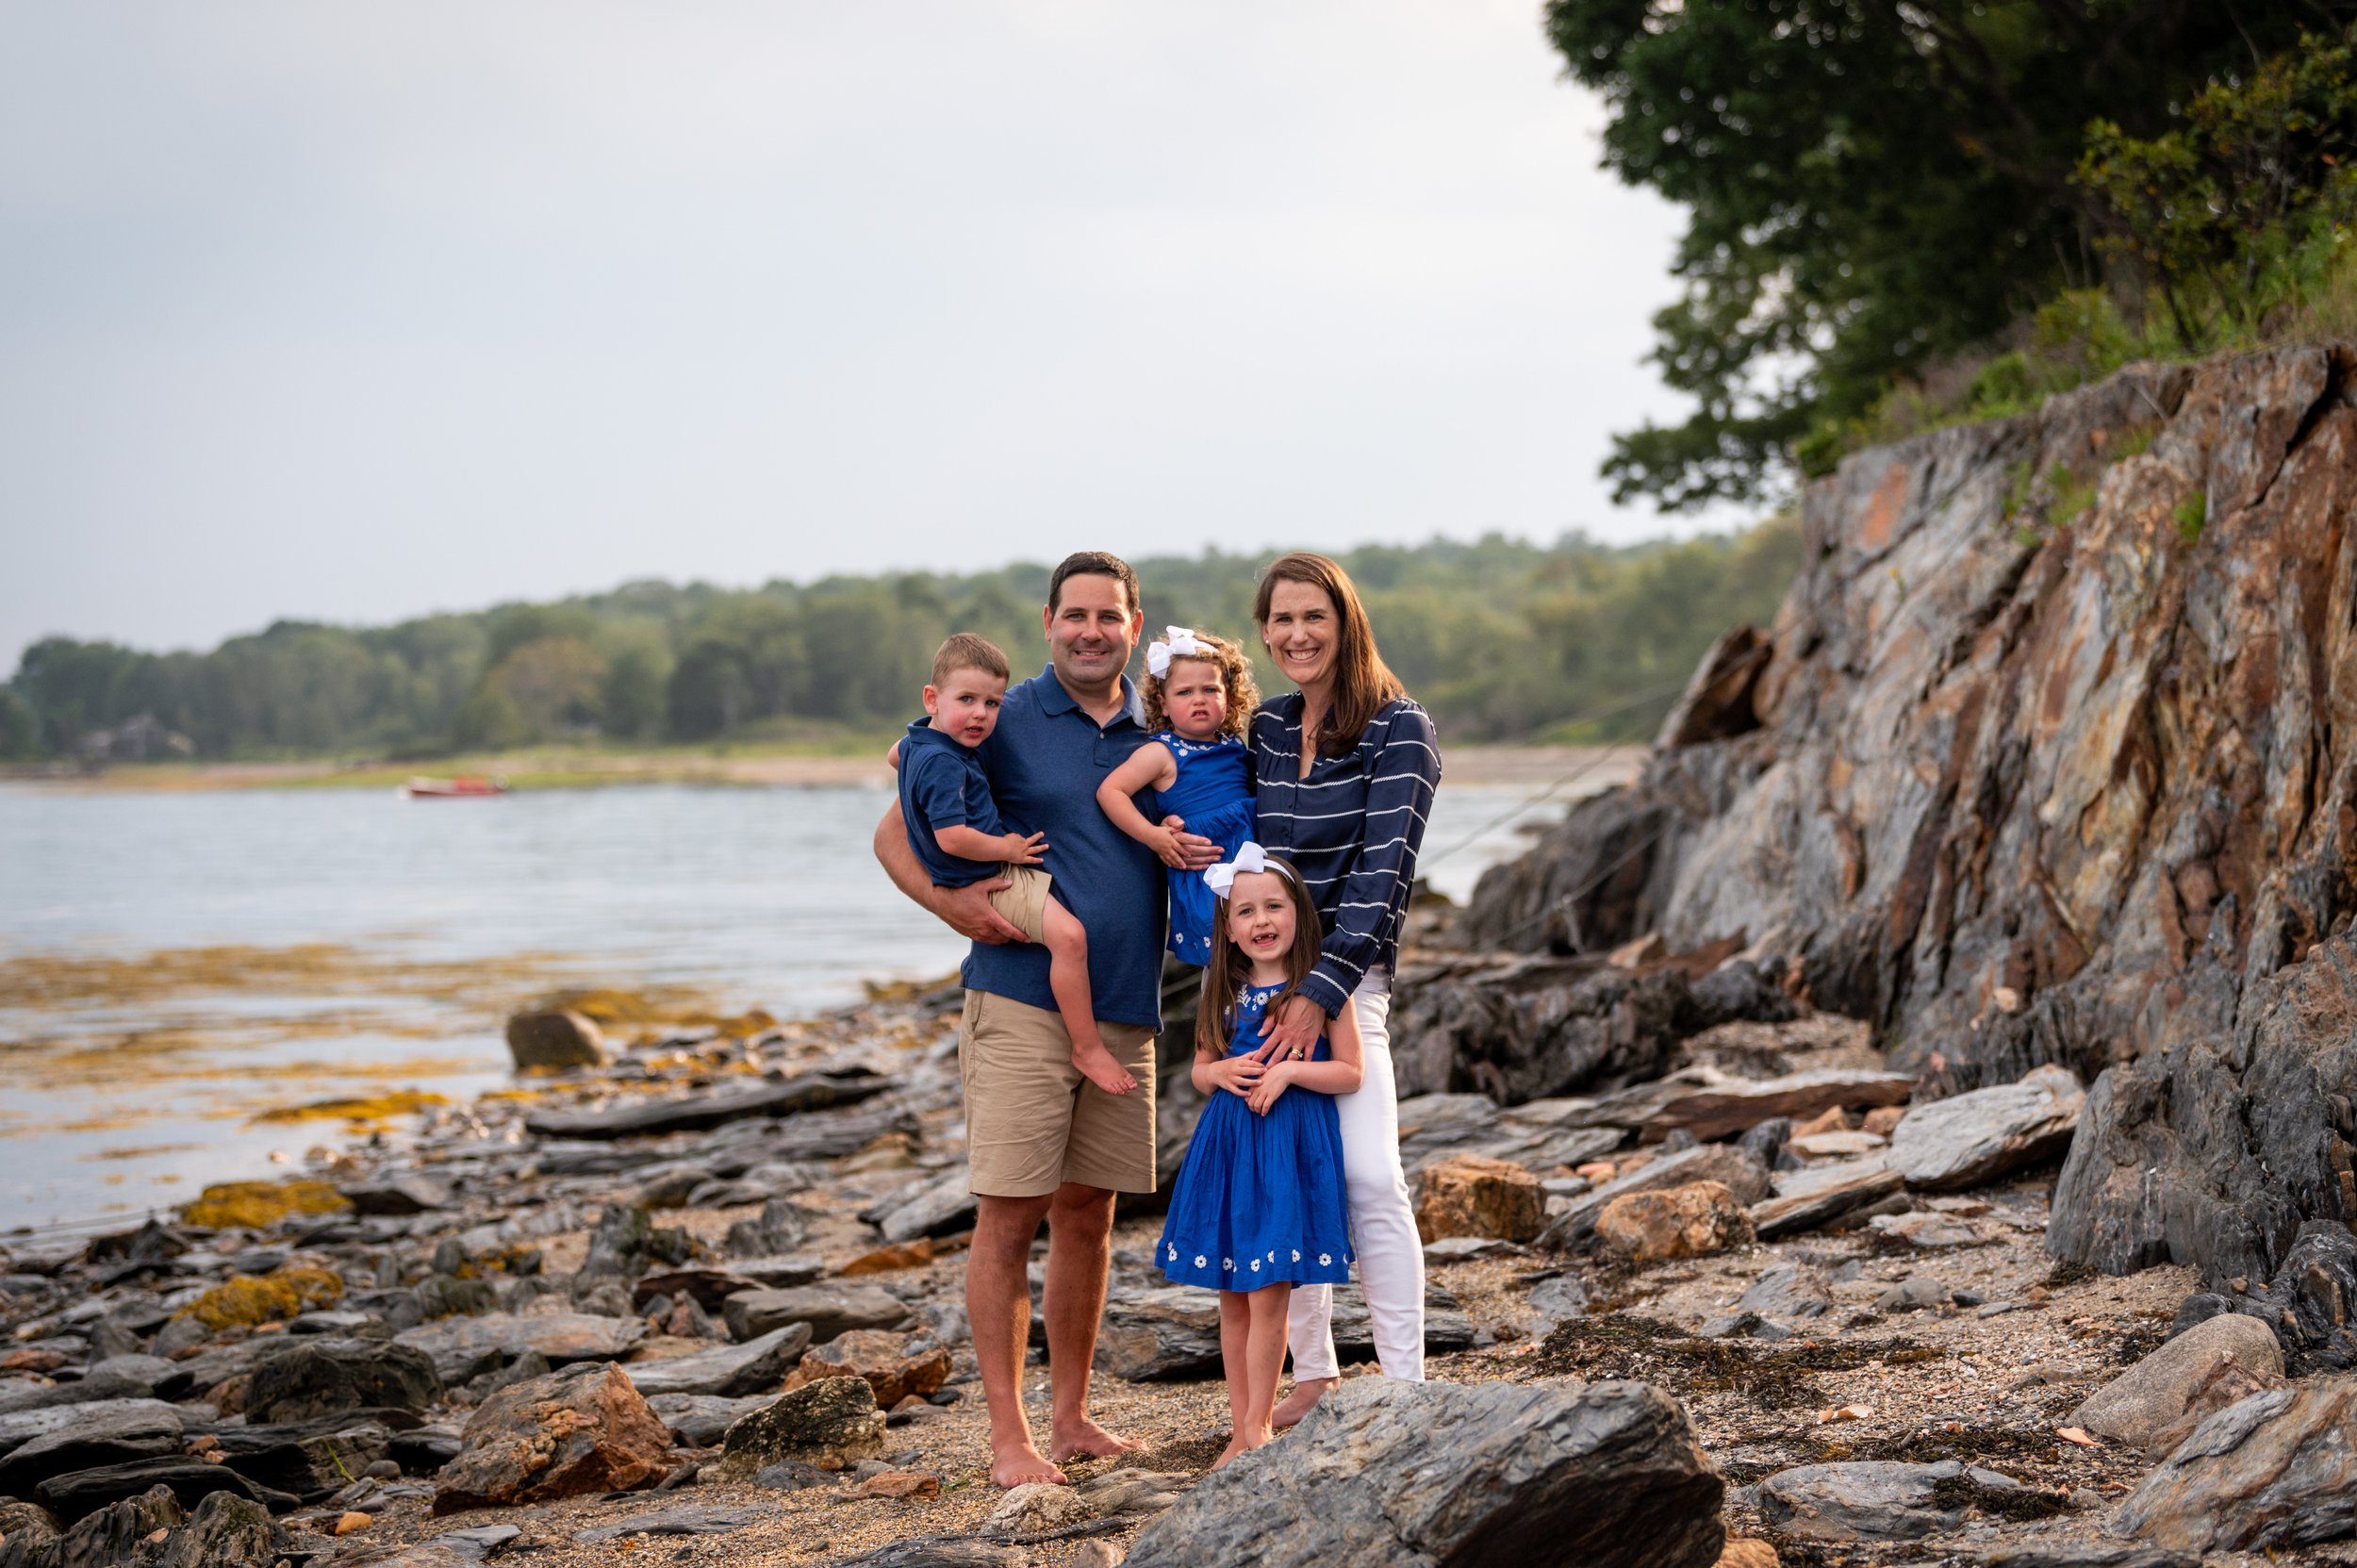 lindsay murphy photography | portland maine family photographer | Chebeague Island family photo on rocks.jpg